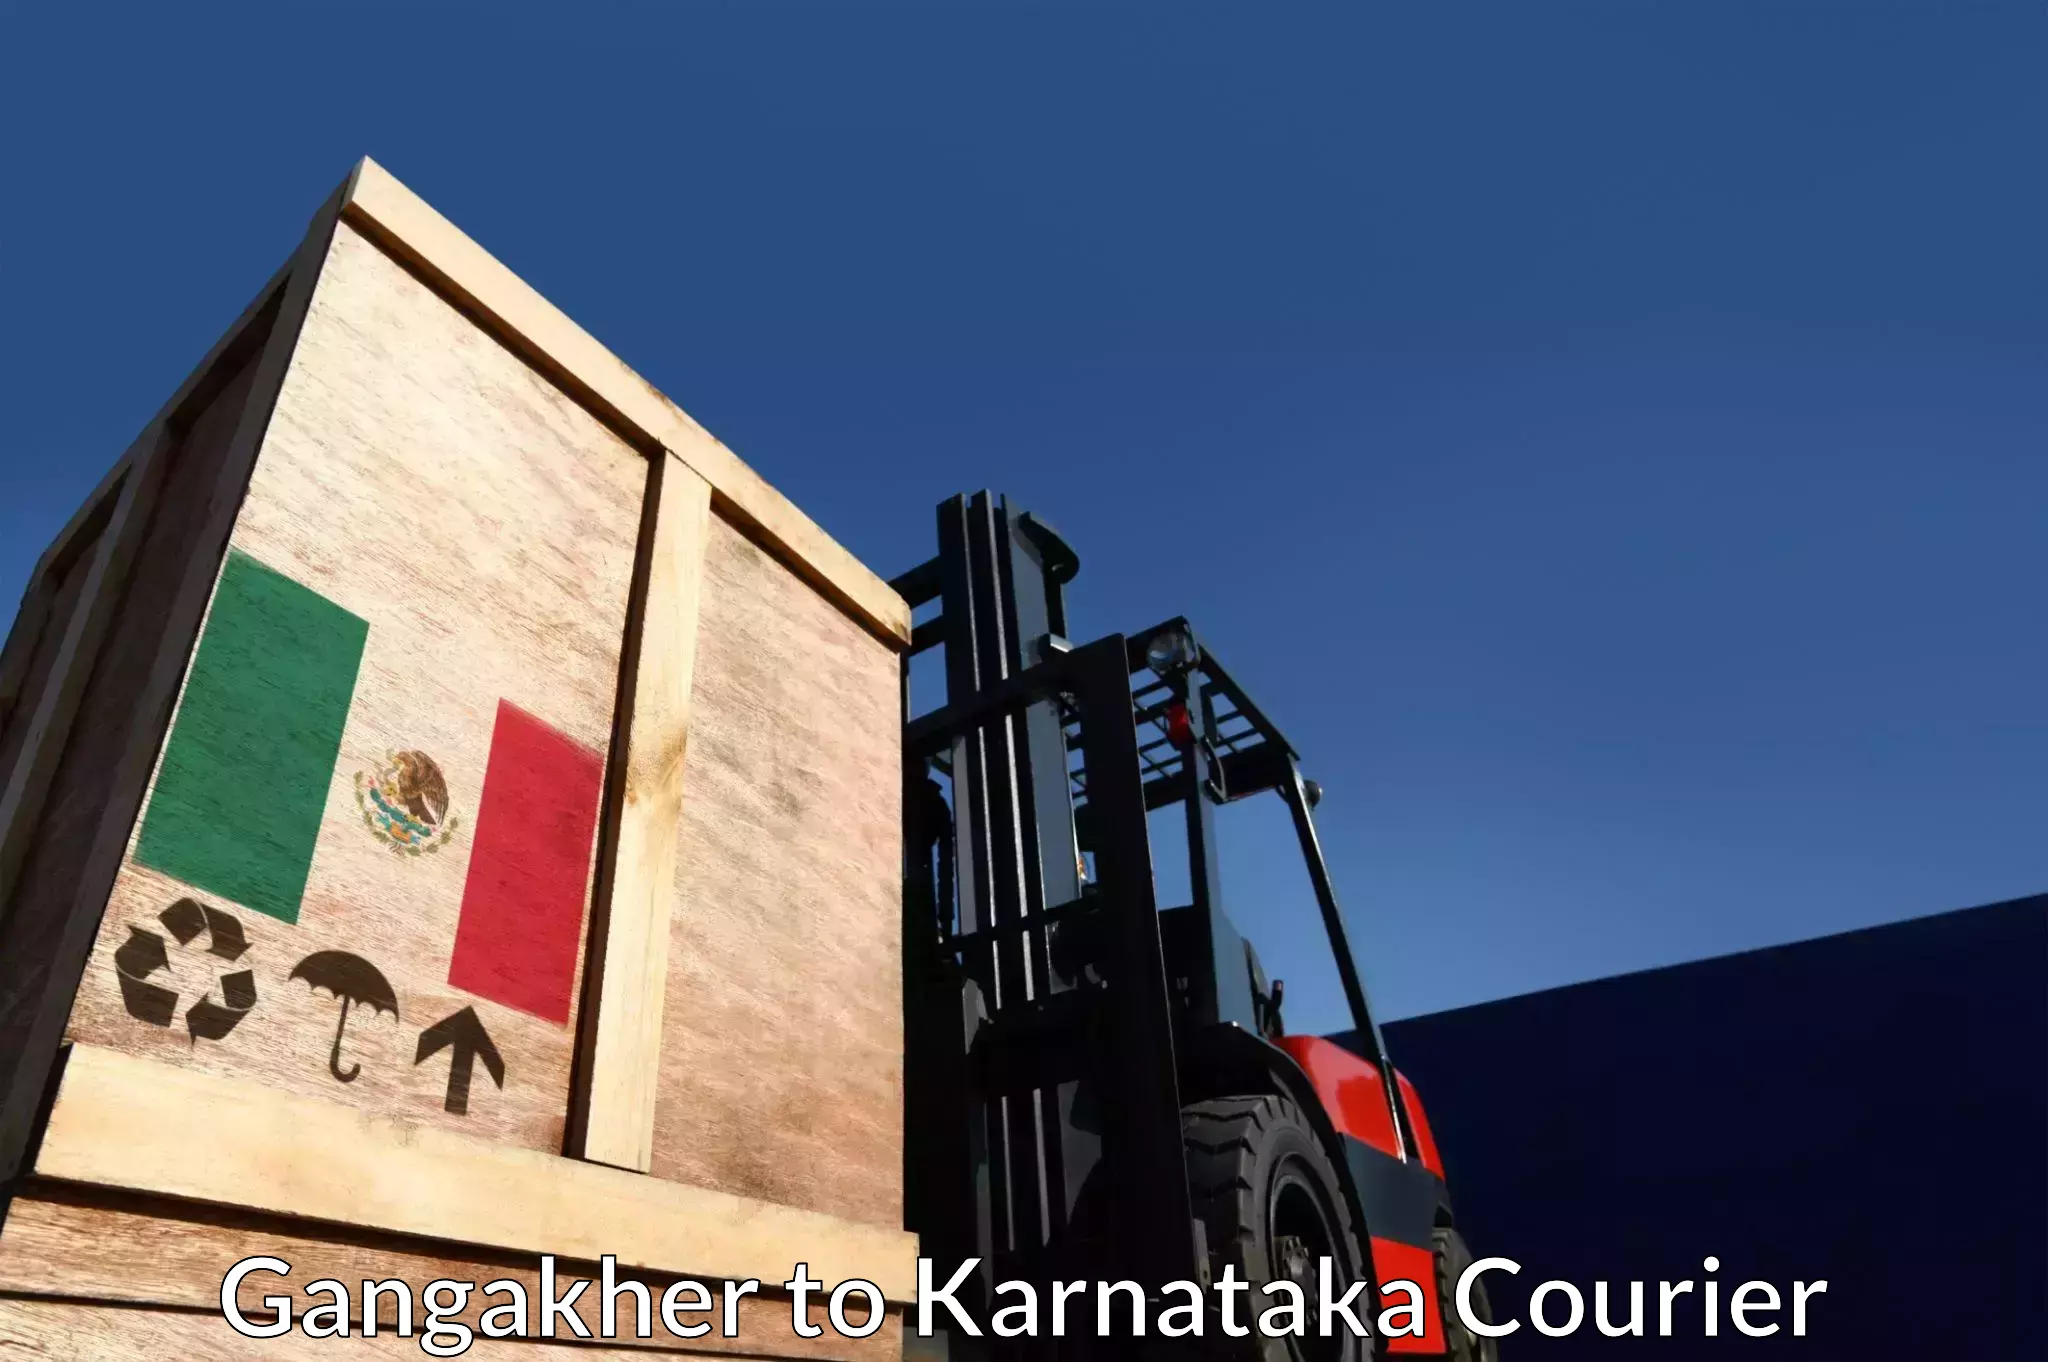 Courier service partnerships Gangakher to Karnataka